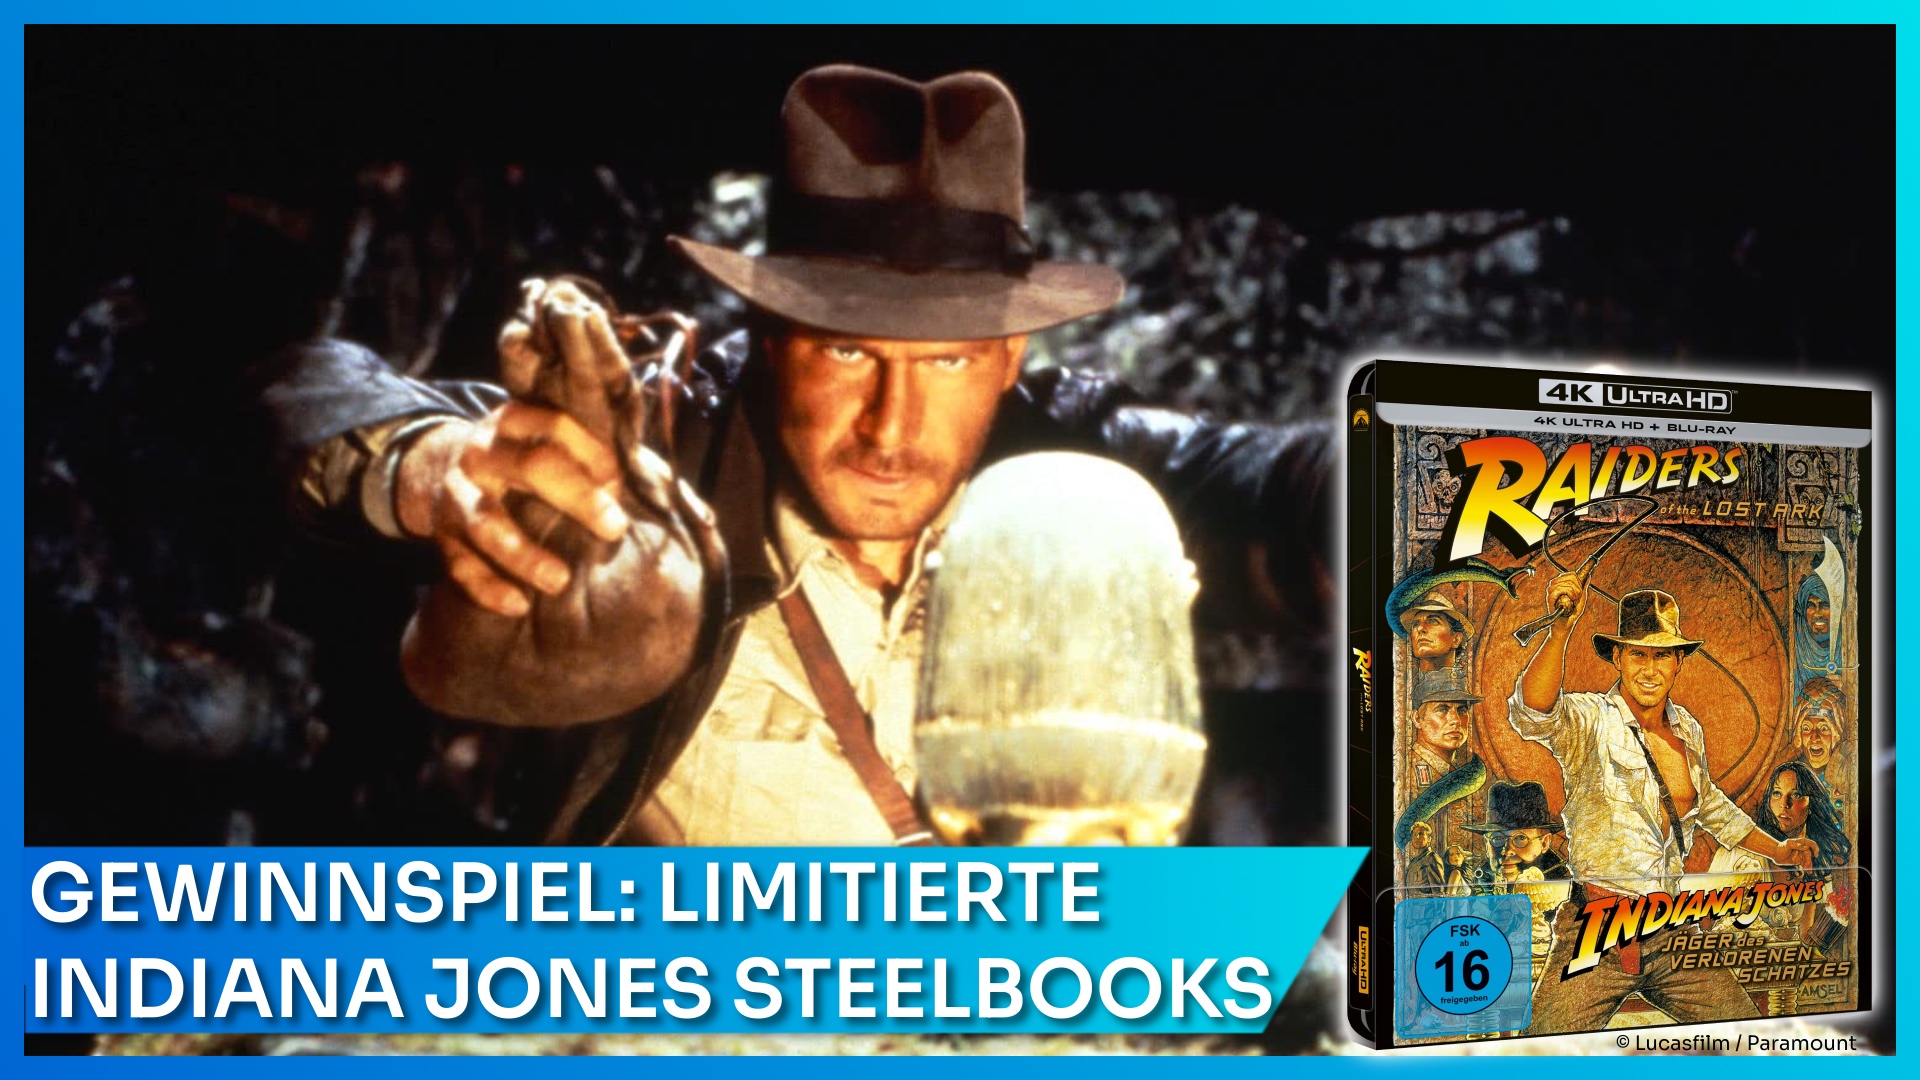 Indiana Jones - Jäger des verlorenen Schatzes 4K Ultra HD Blu-ray Steelbook Gewinnspiel